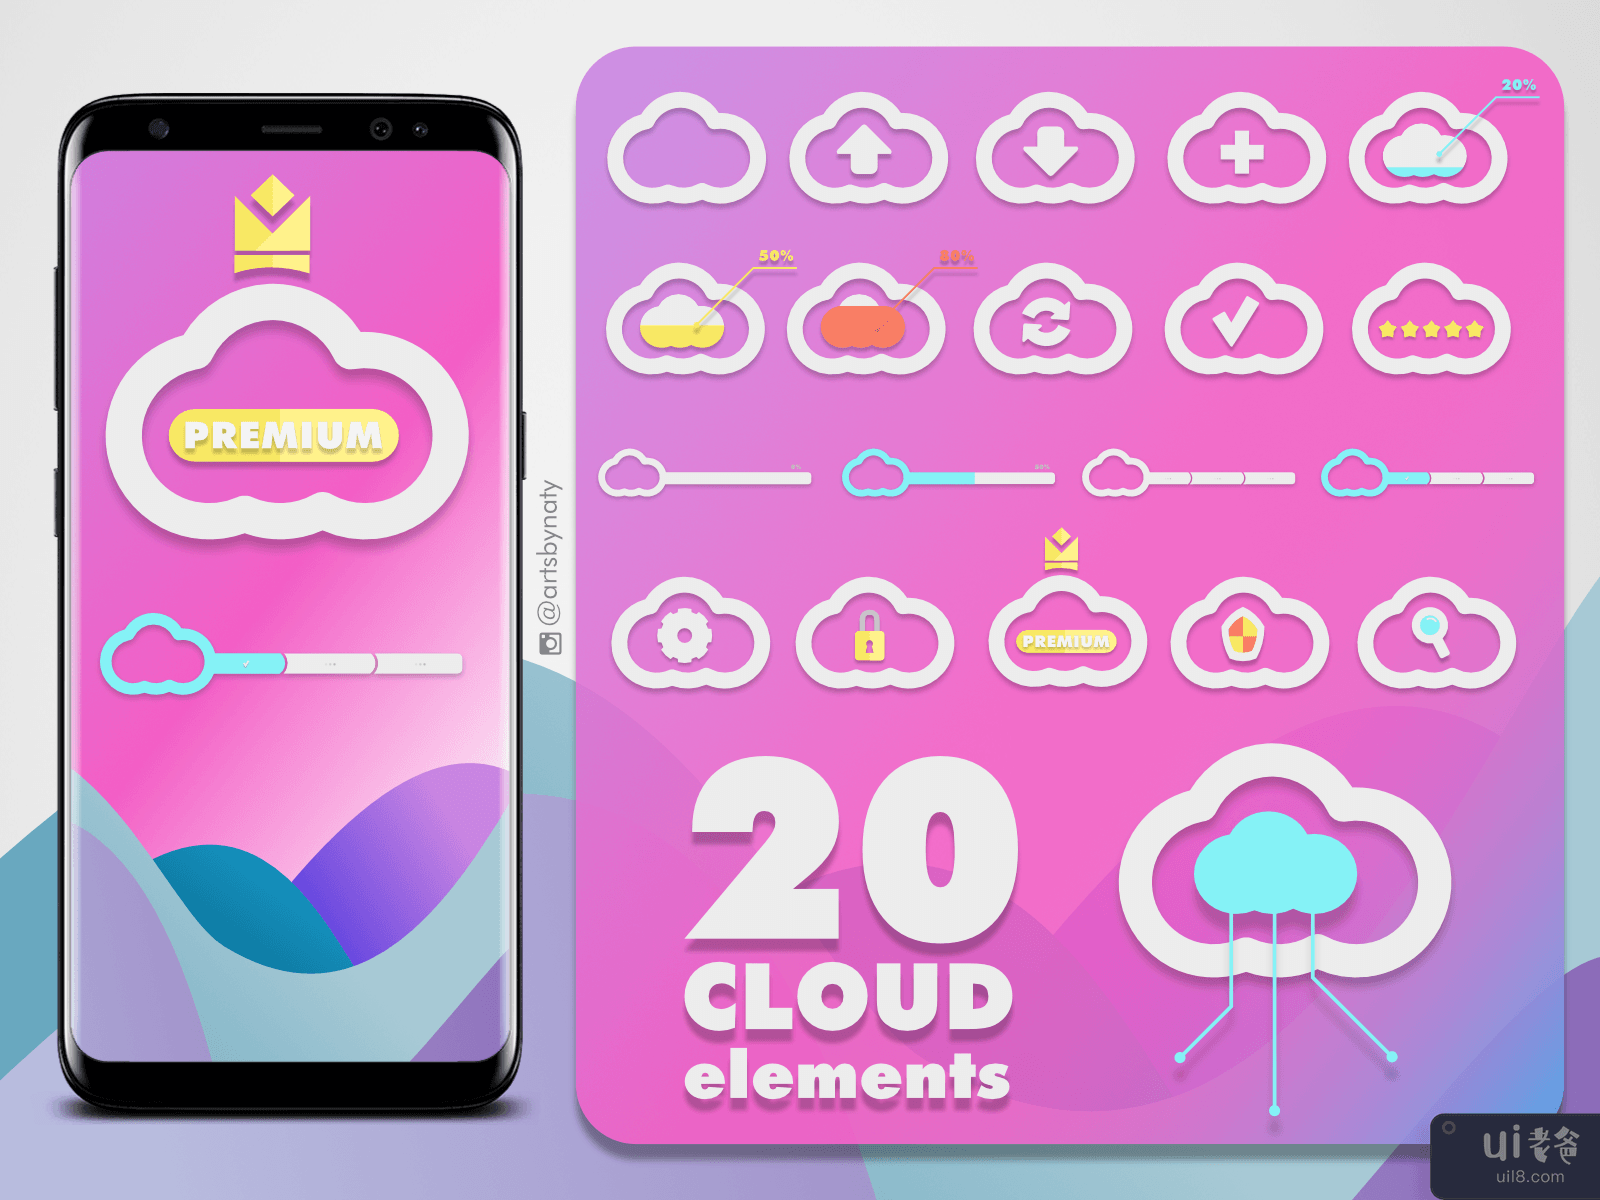 Cloud Elements Kit - 20 Clean floating clouds design.